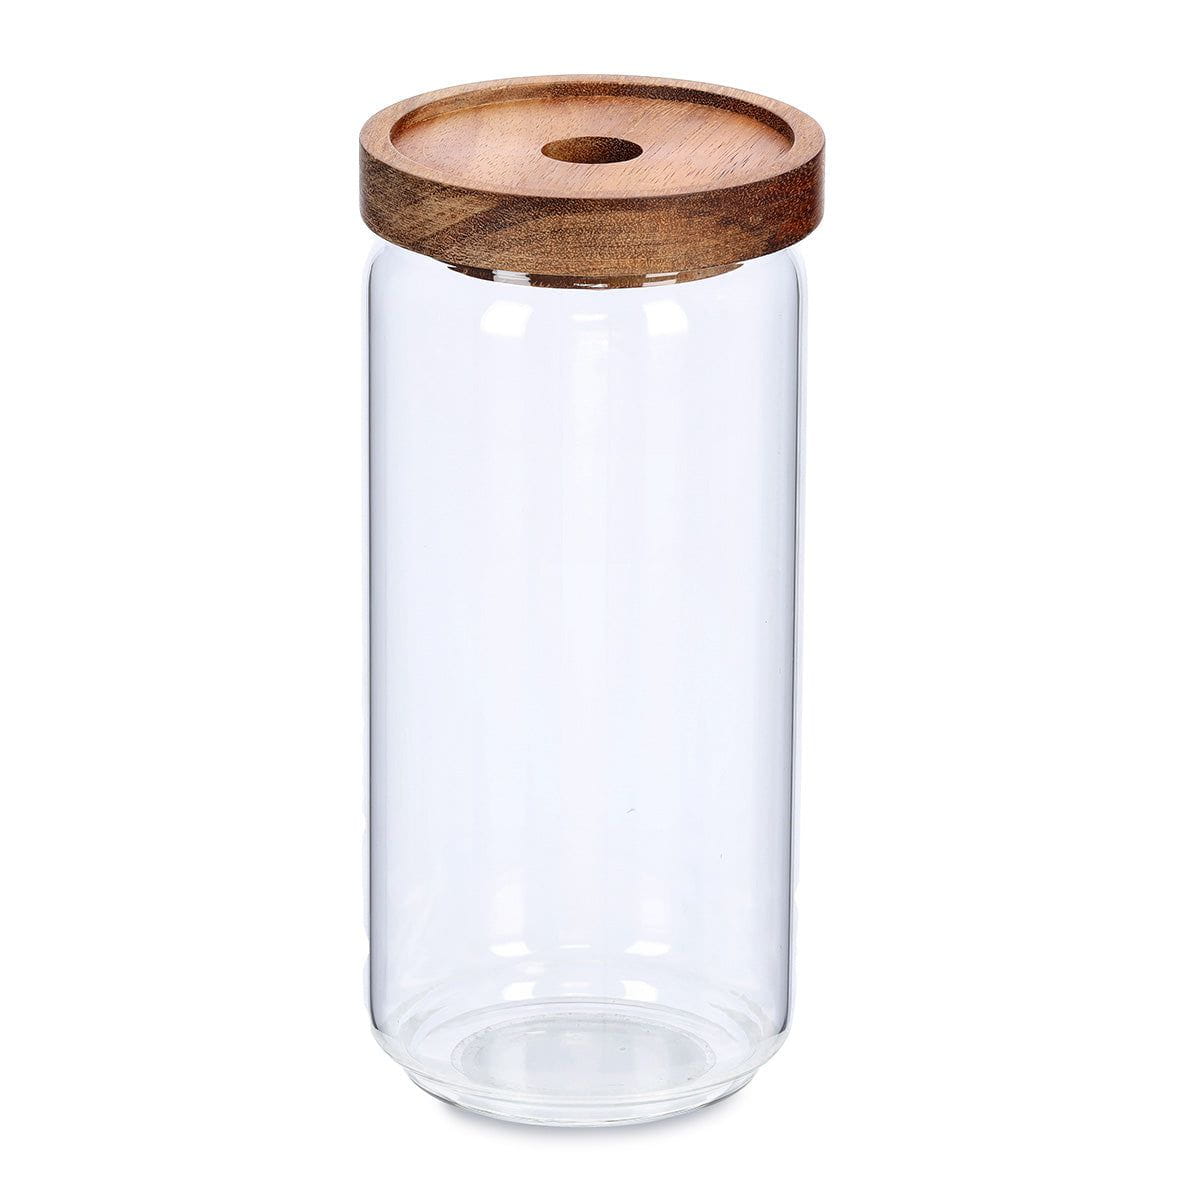 Akacie glas med hul 950 ml aestetisk ele living